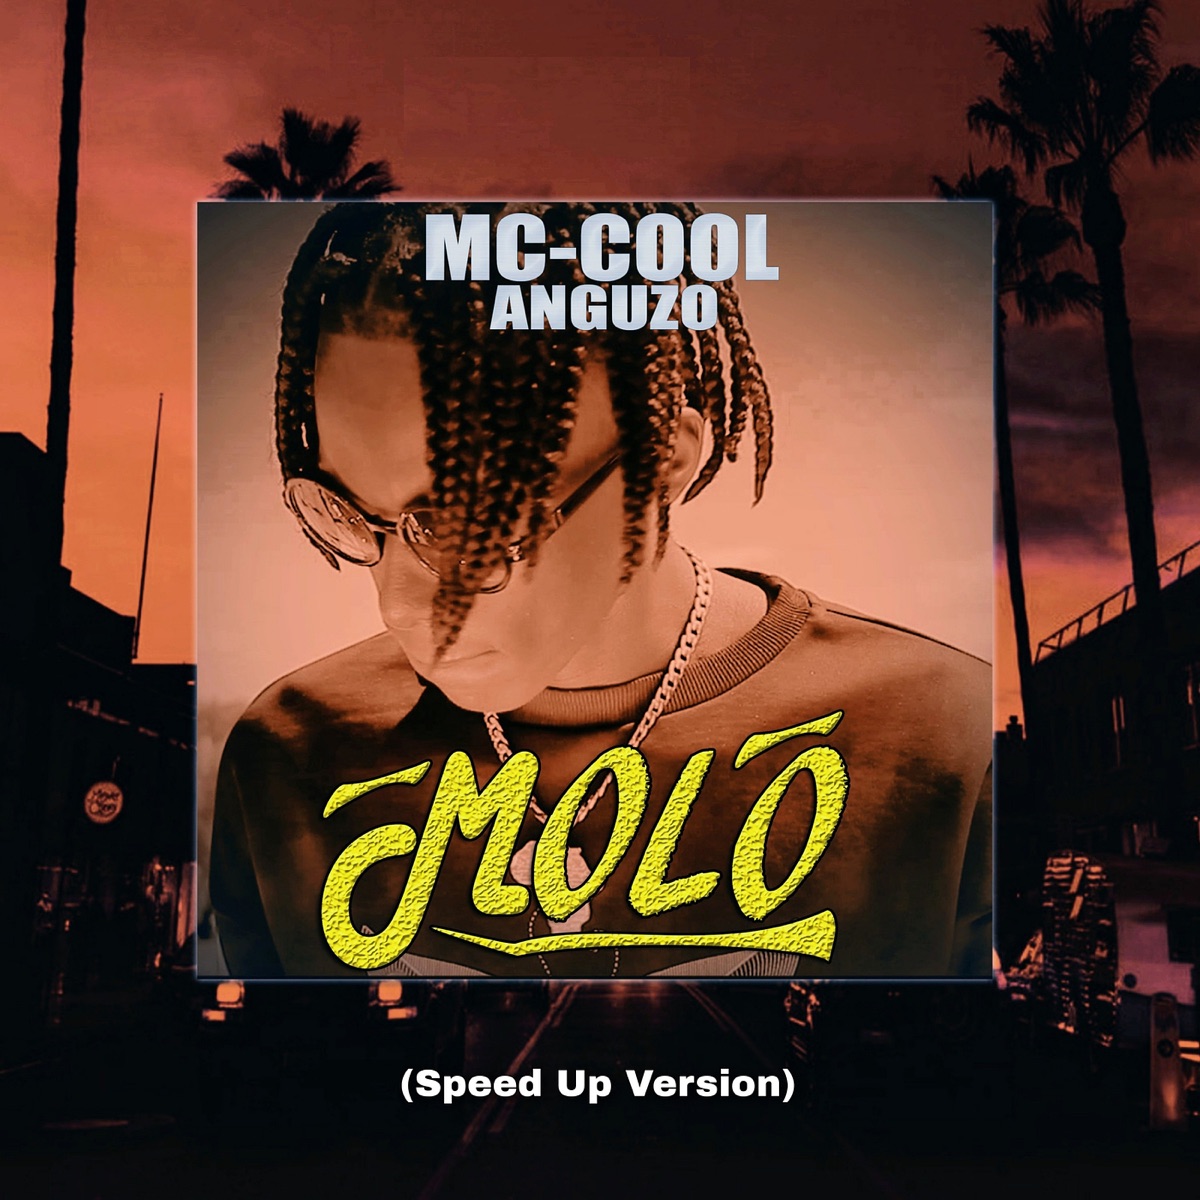 Motivation - Single by Mc-cool Anguzo on Apple Music